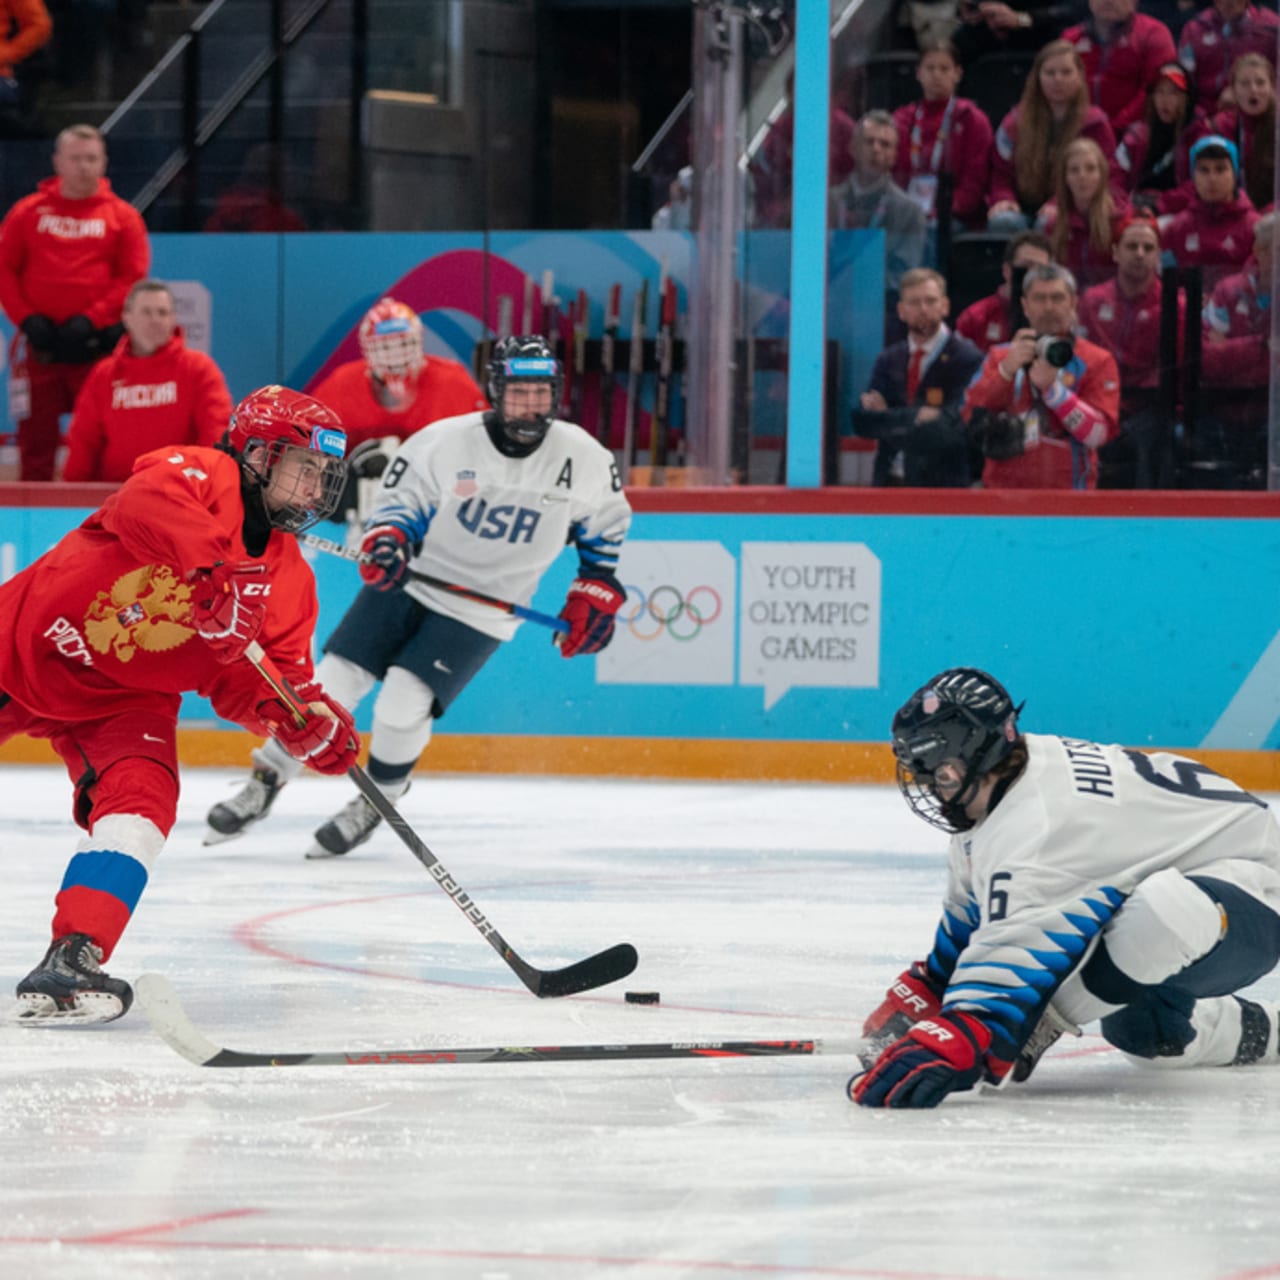 Eishockey Herren Finale Live Olympische Jugendspiele 2020